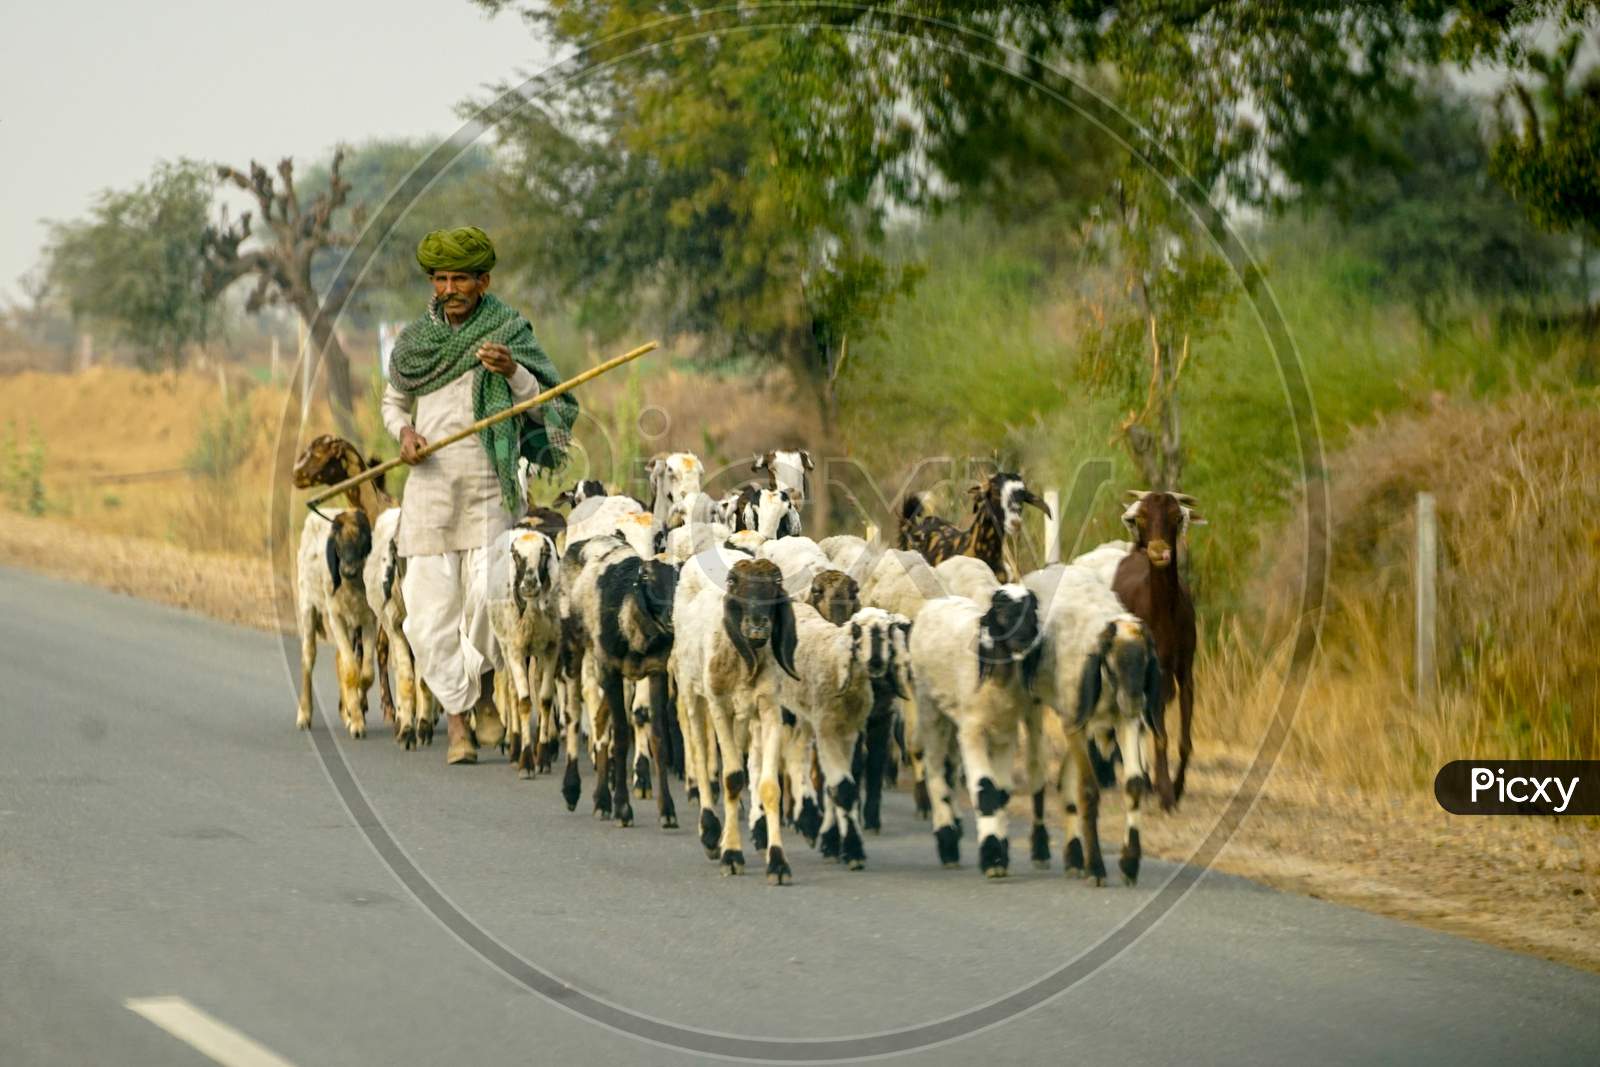 A Rajasthani shepherd